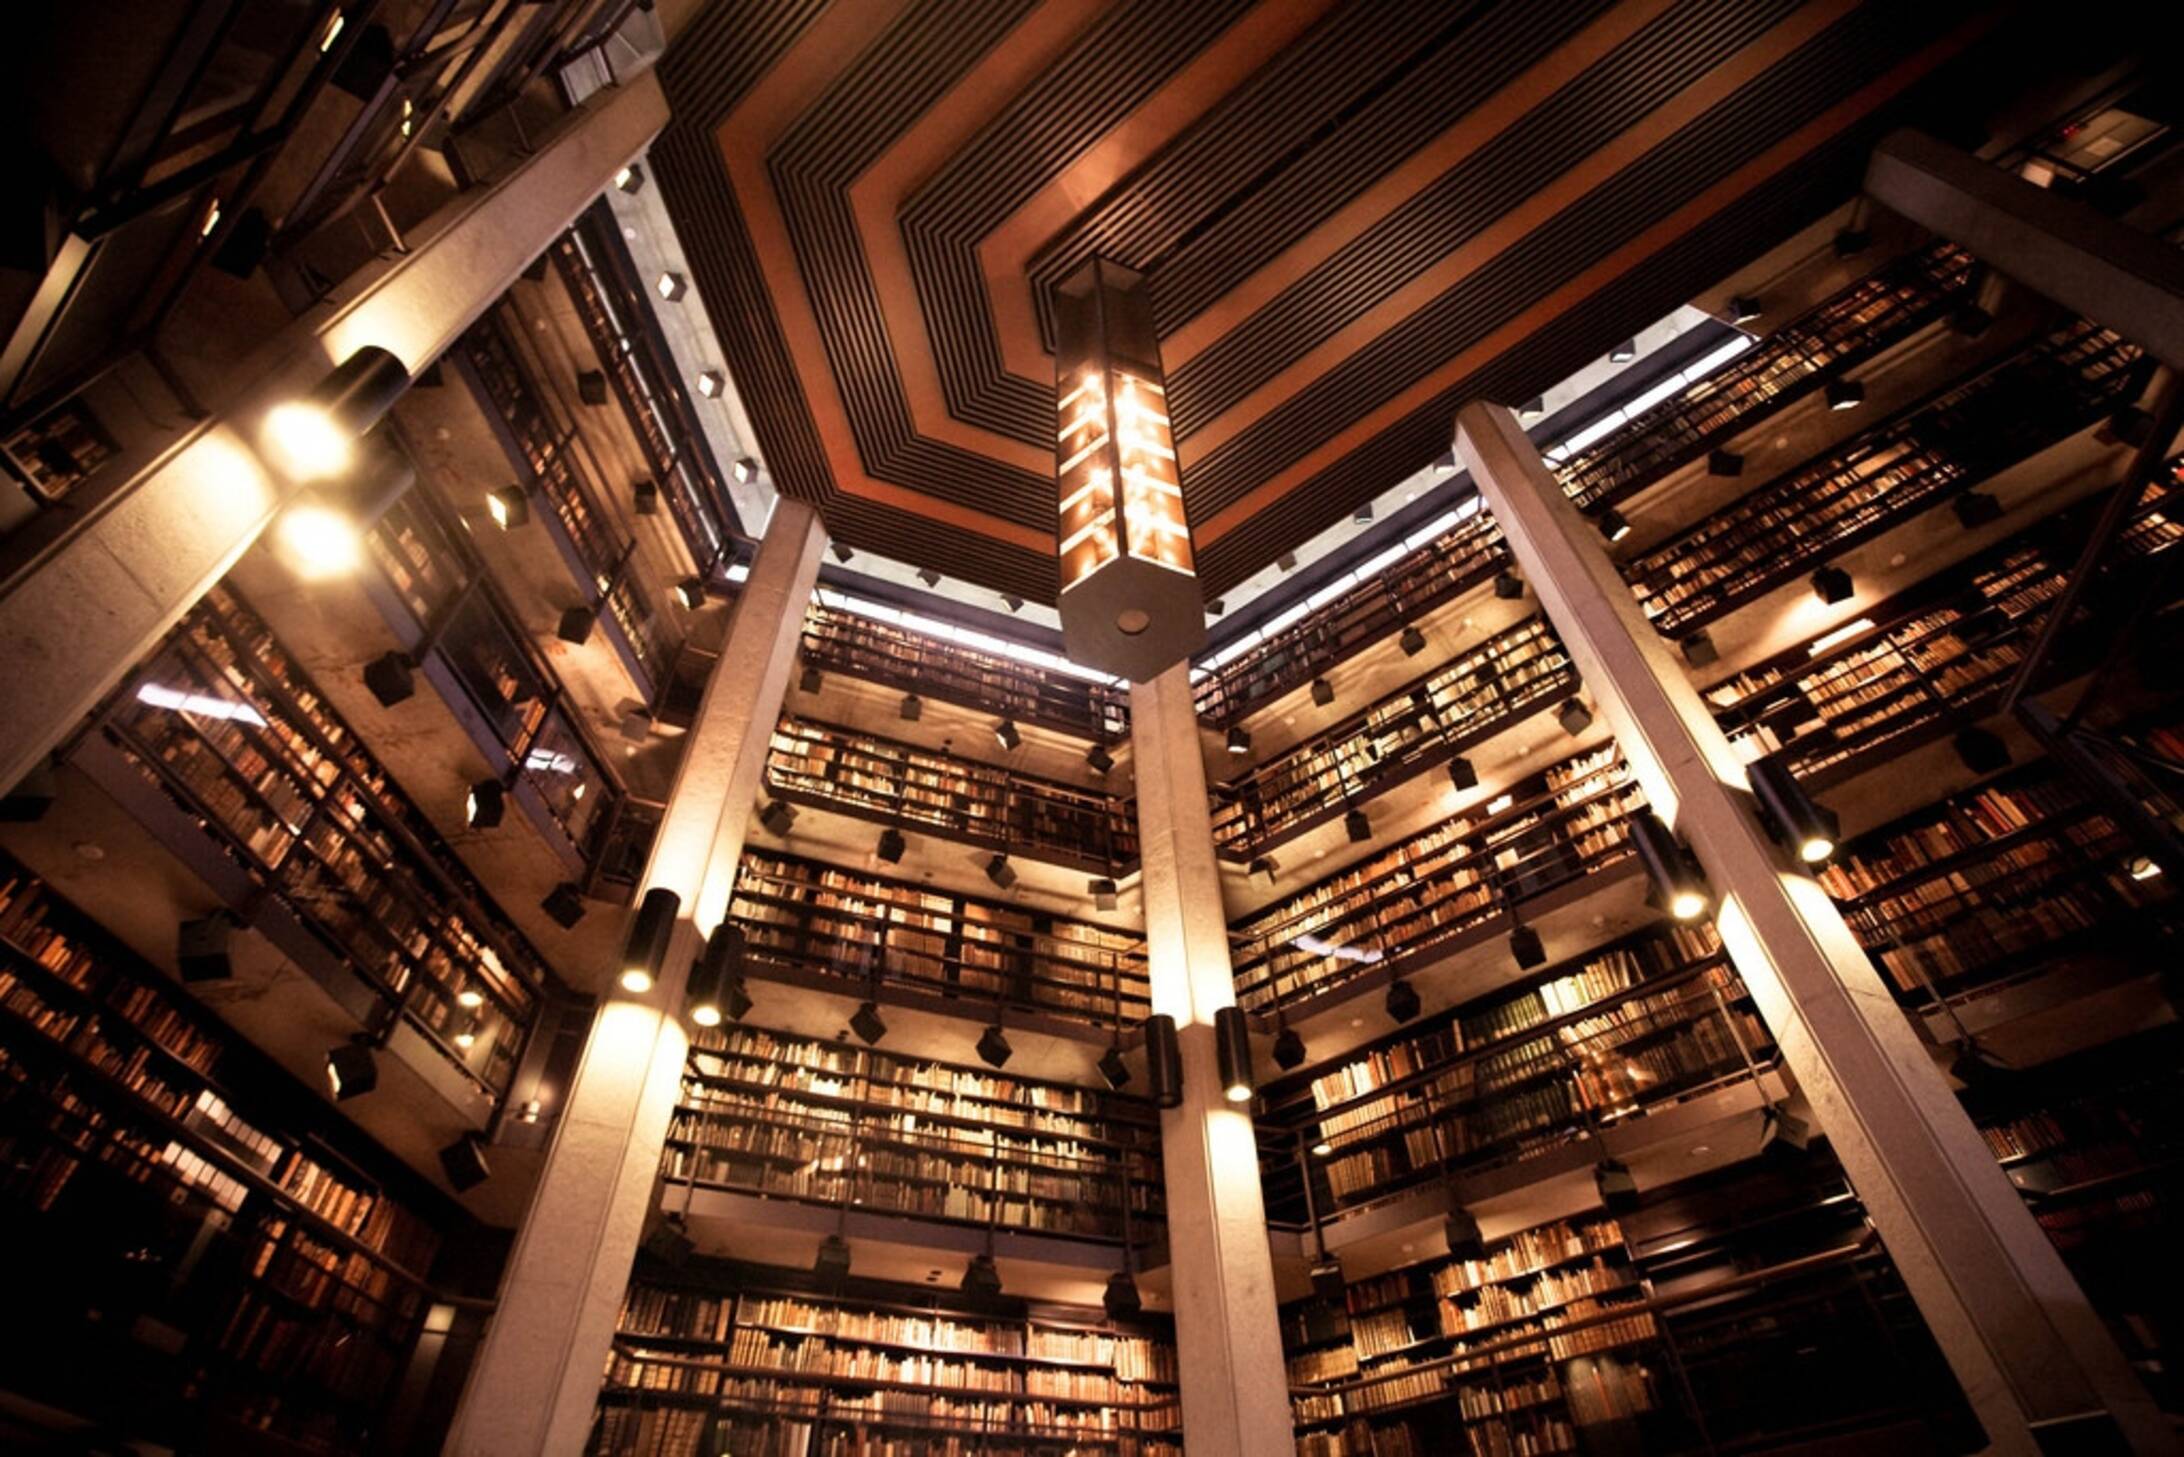 Библиотека без слов. Брайан Кравиц библиотека. Библиотека университета Торонто. Йельский университет библиотека. Библиотека Фишера (Fisher Library) в сиднейском университете.